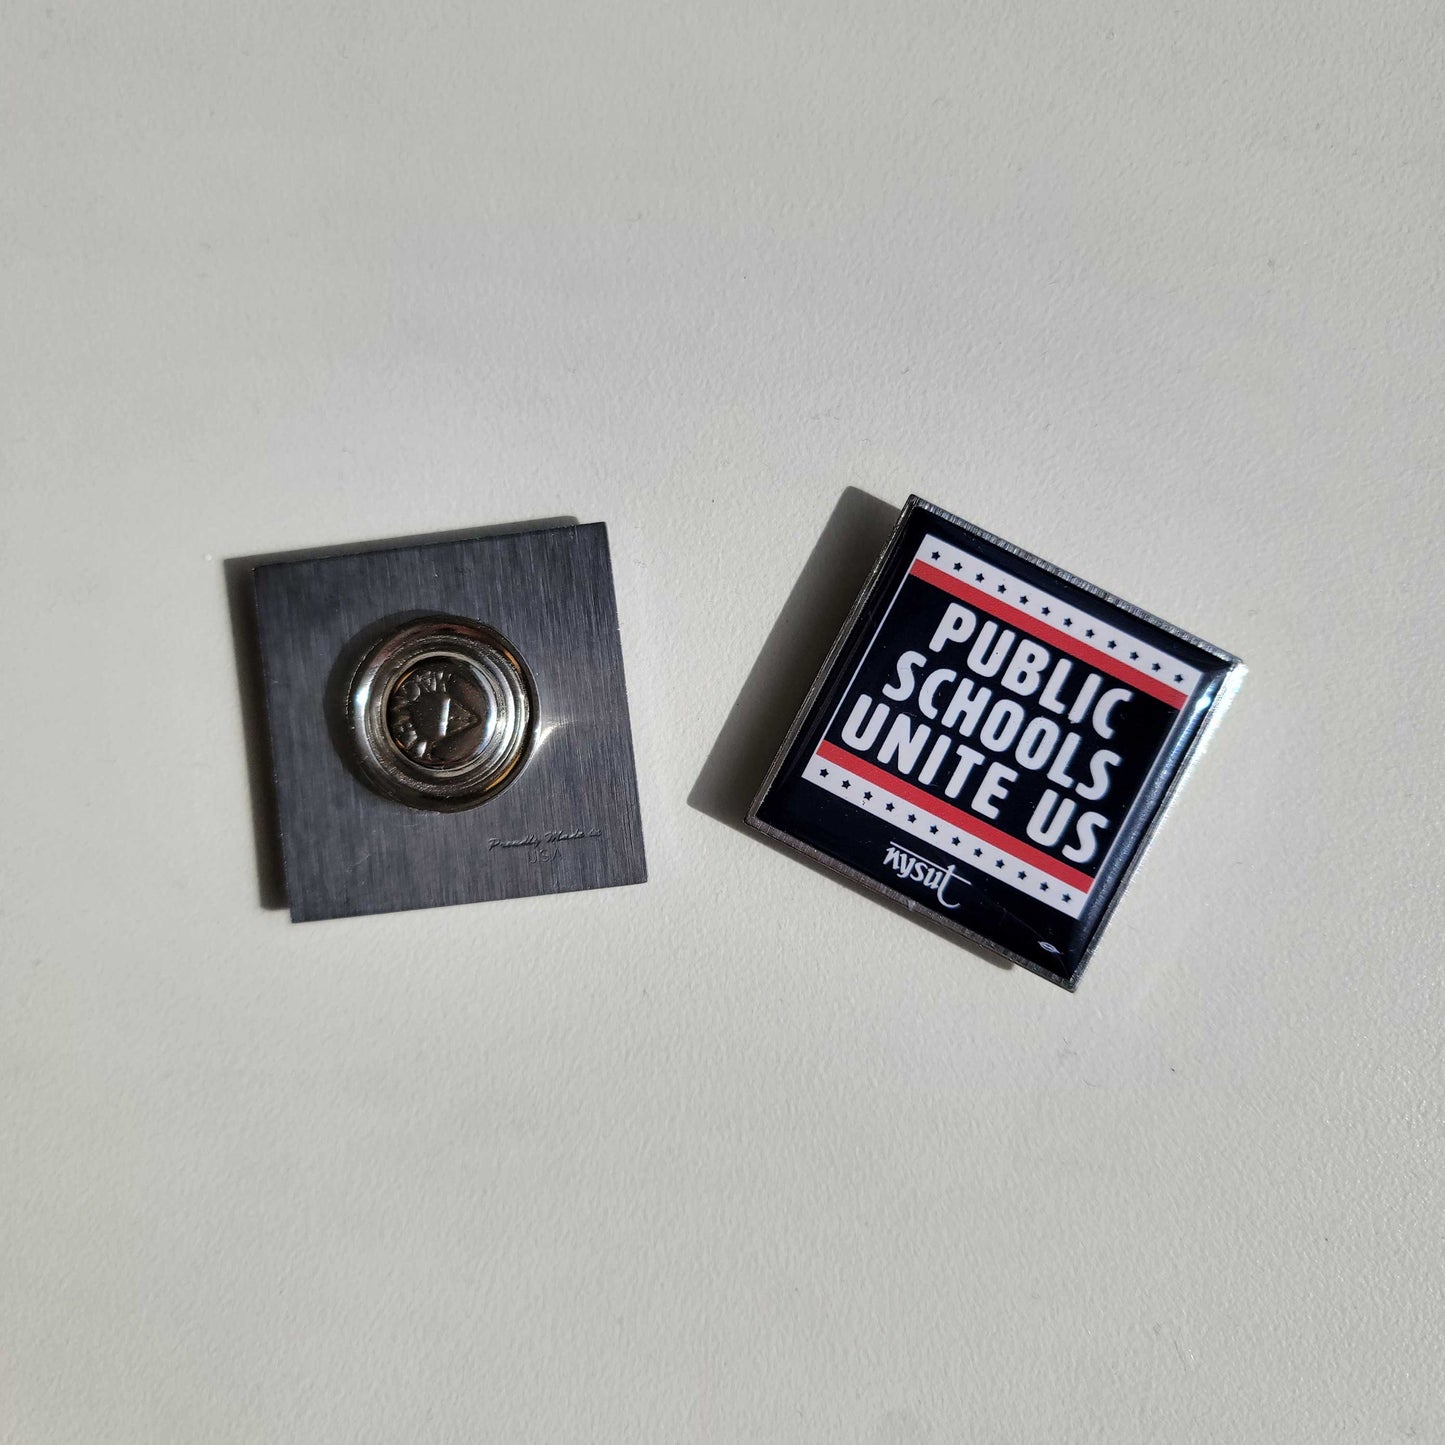 Public Schools Unite Us Magnetic Lapel Pins